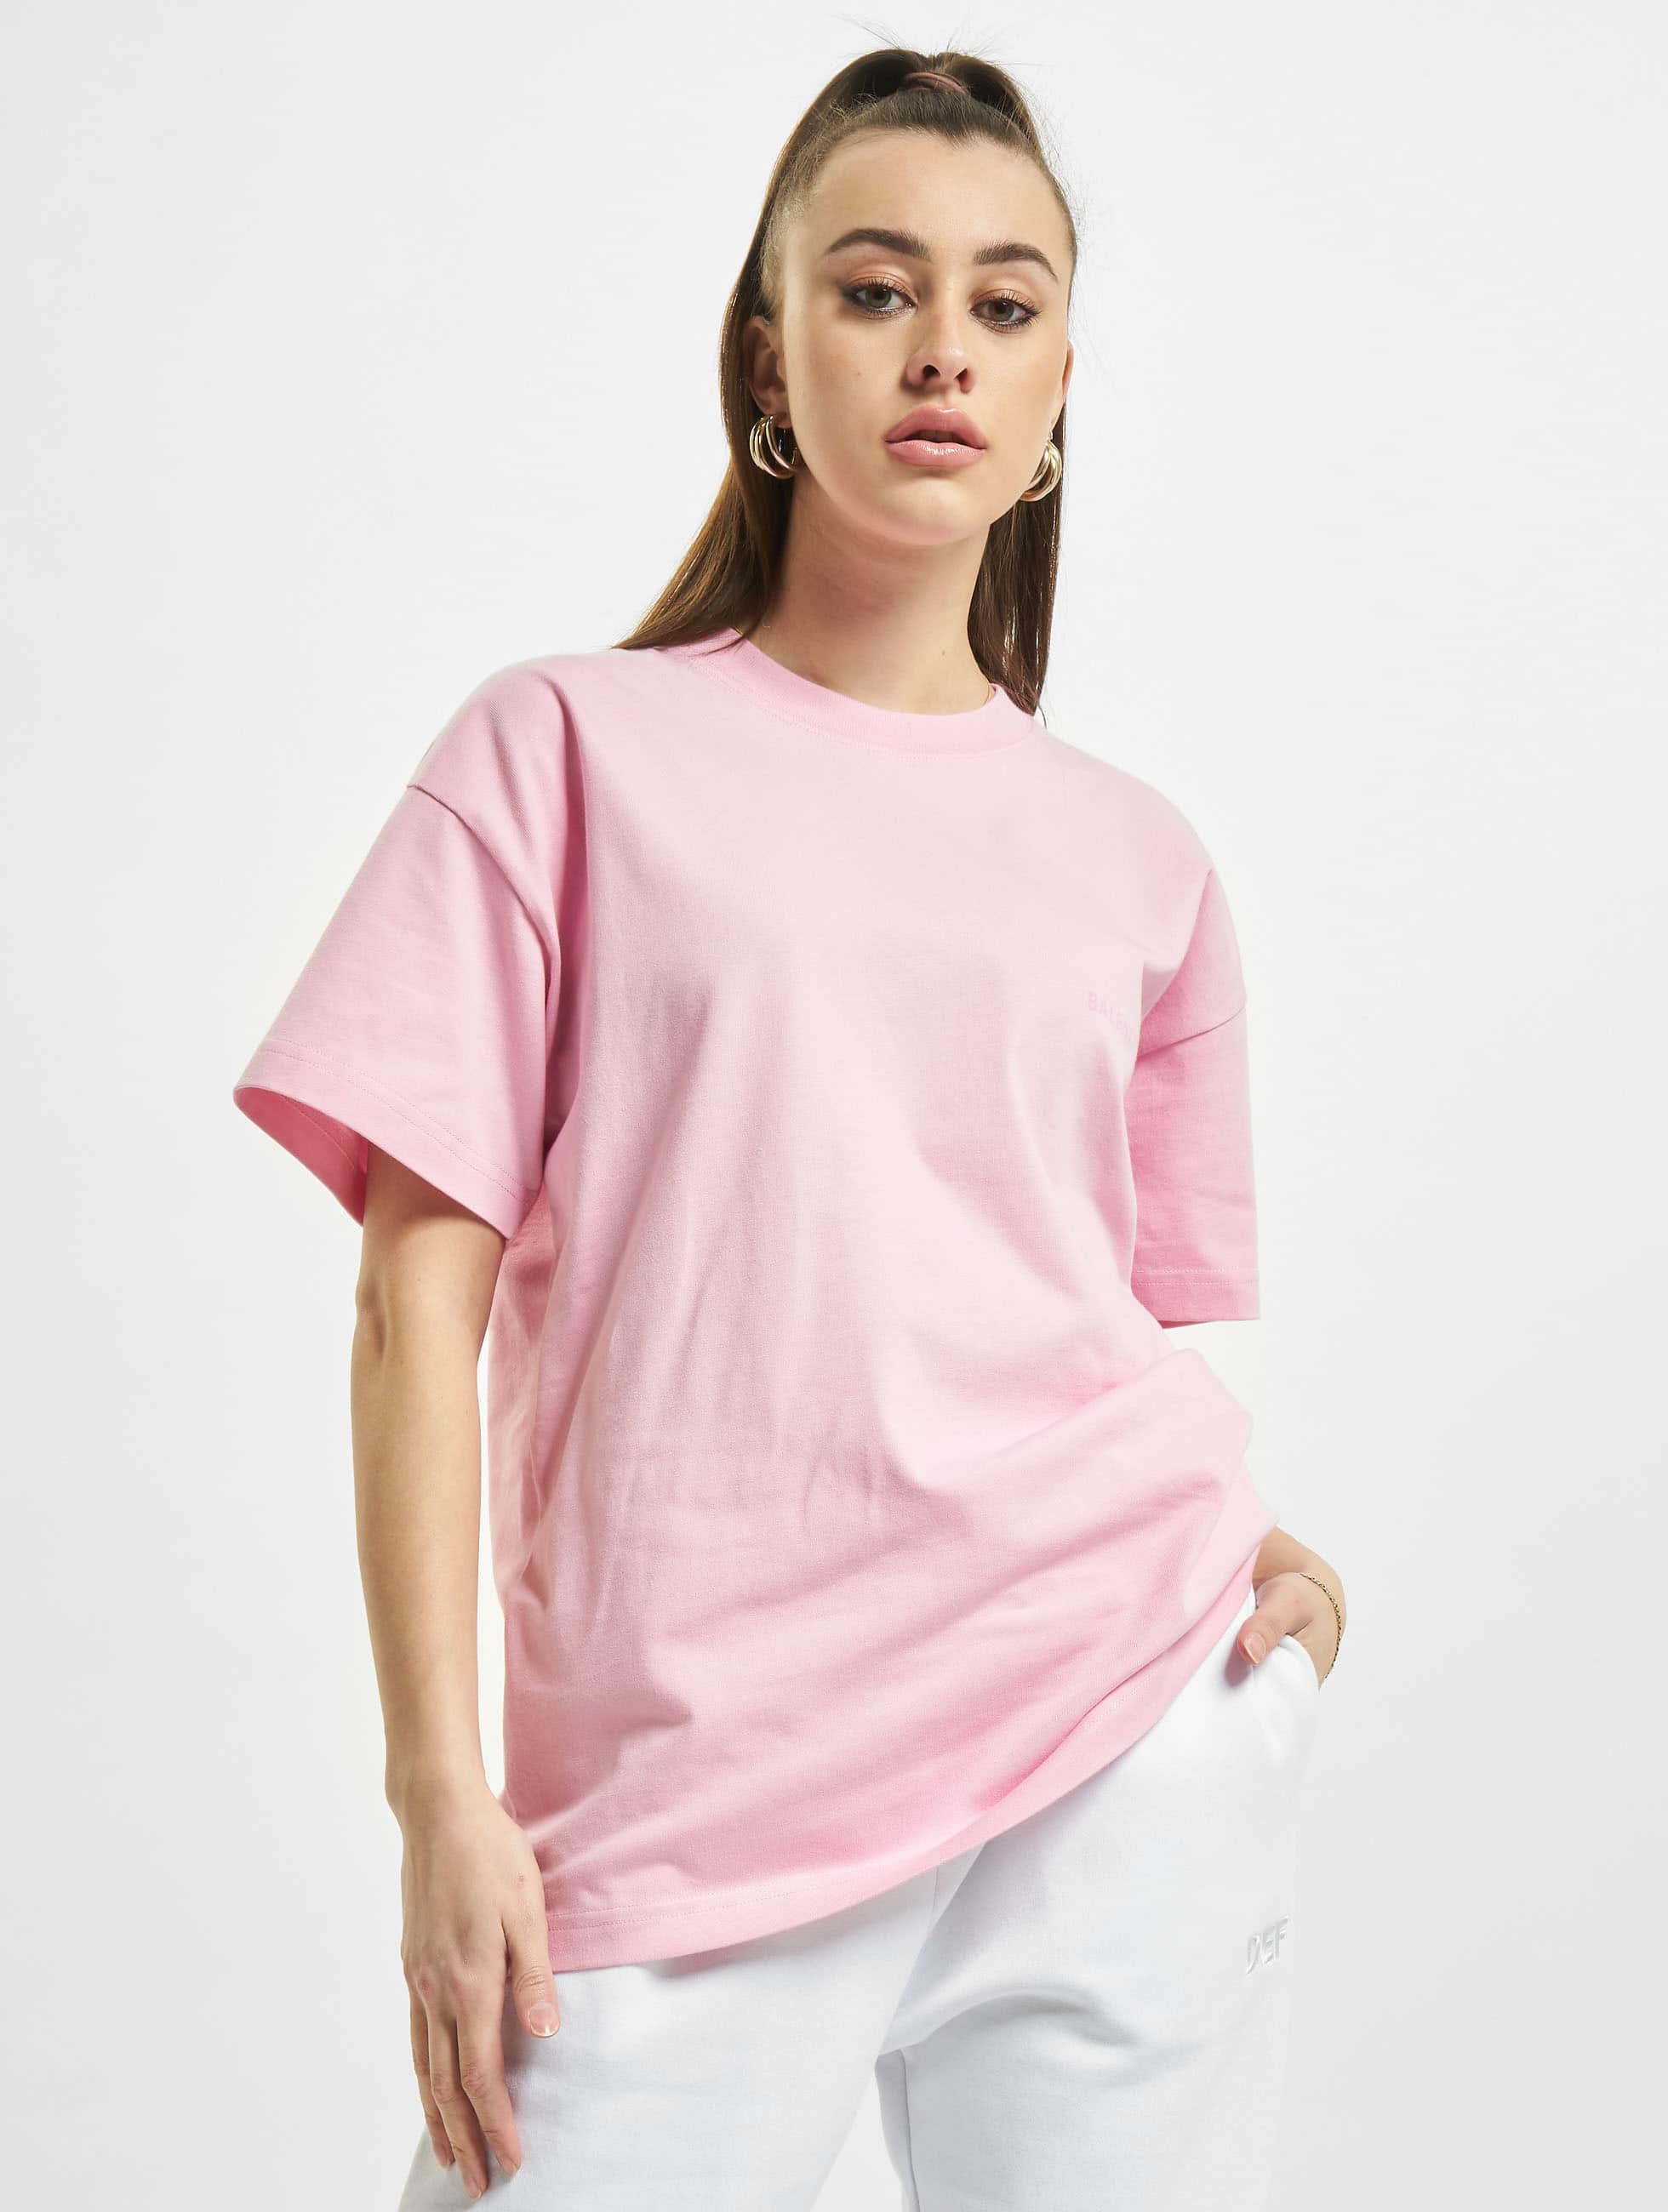 Scheiden Geduld vrachtauto Balenciaga bovenstuk / t-shirt Back Logo in pink 826595